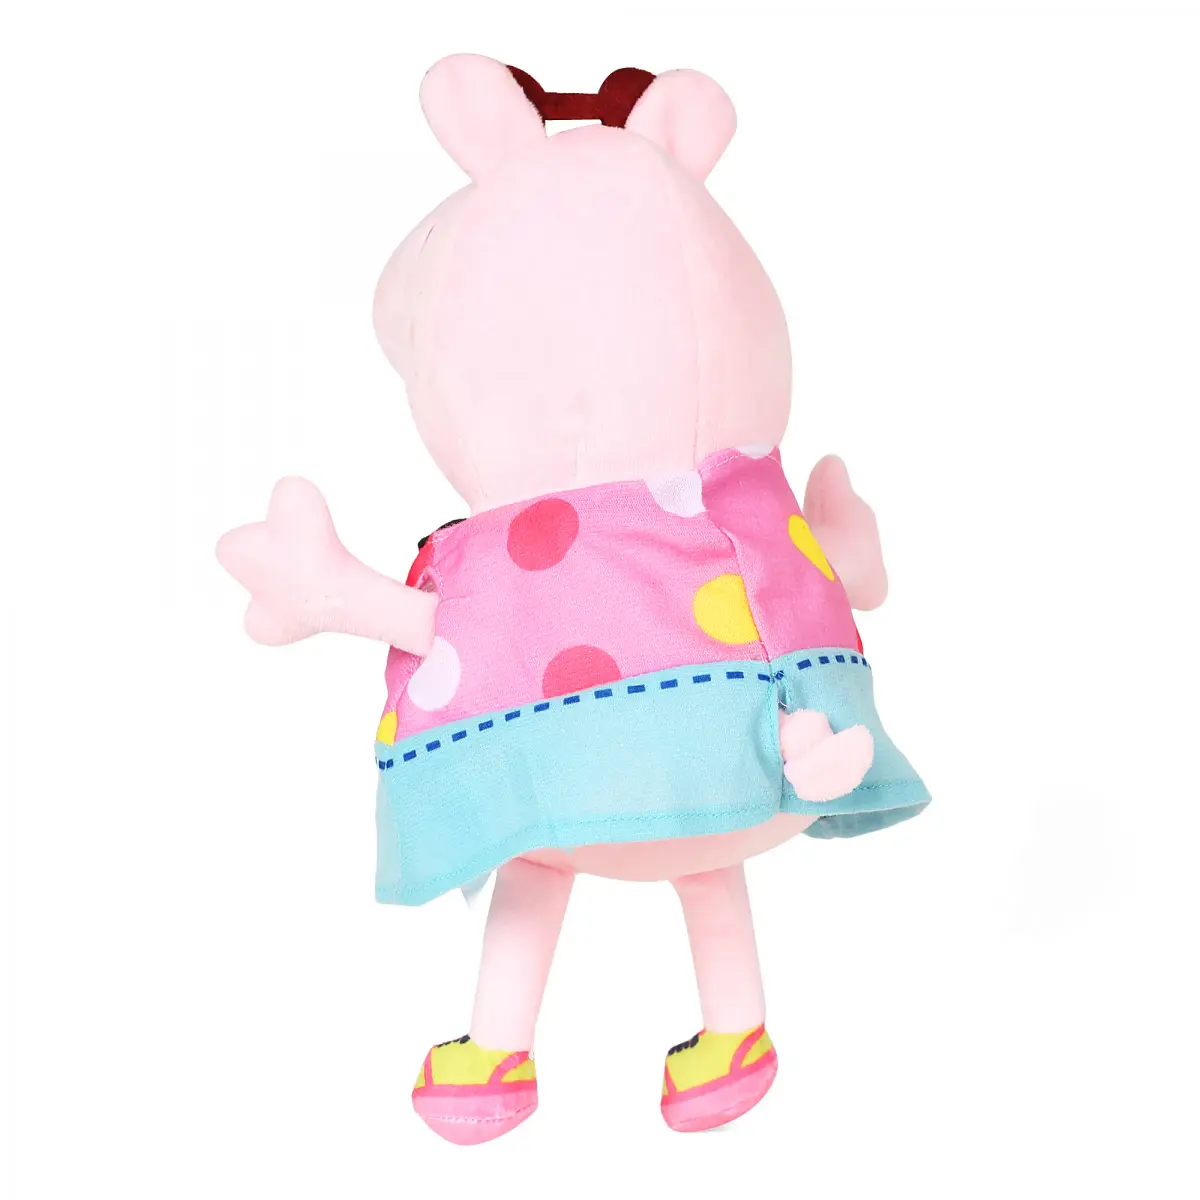 Peppa Pig Fancy Peppa Soft Toy for Kids, 30cm, 18M+, Multicolour